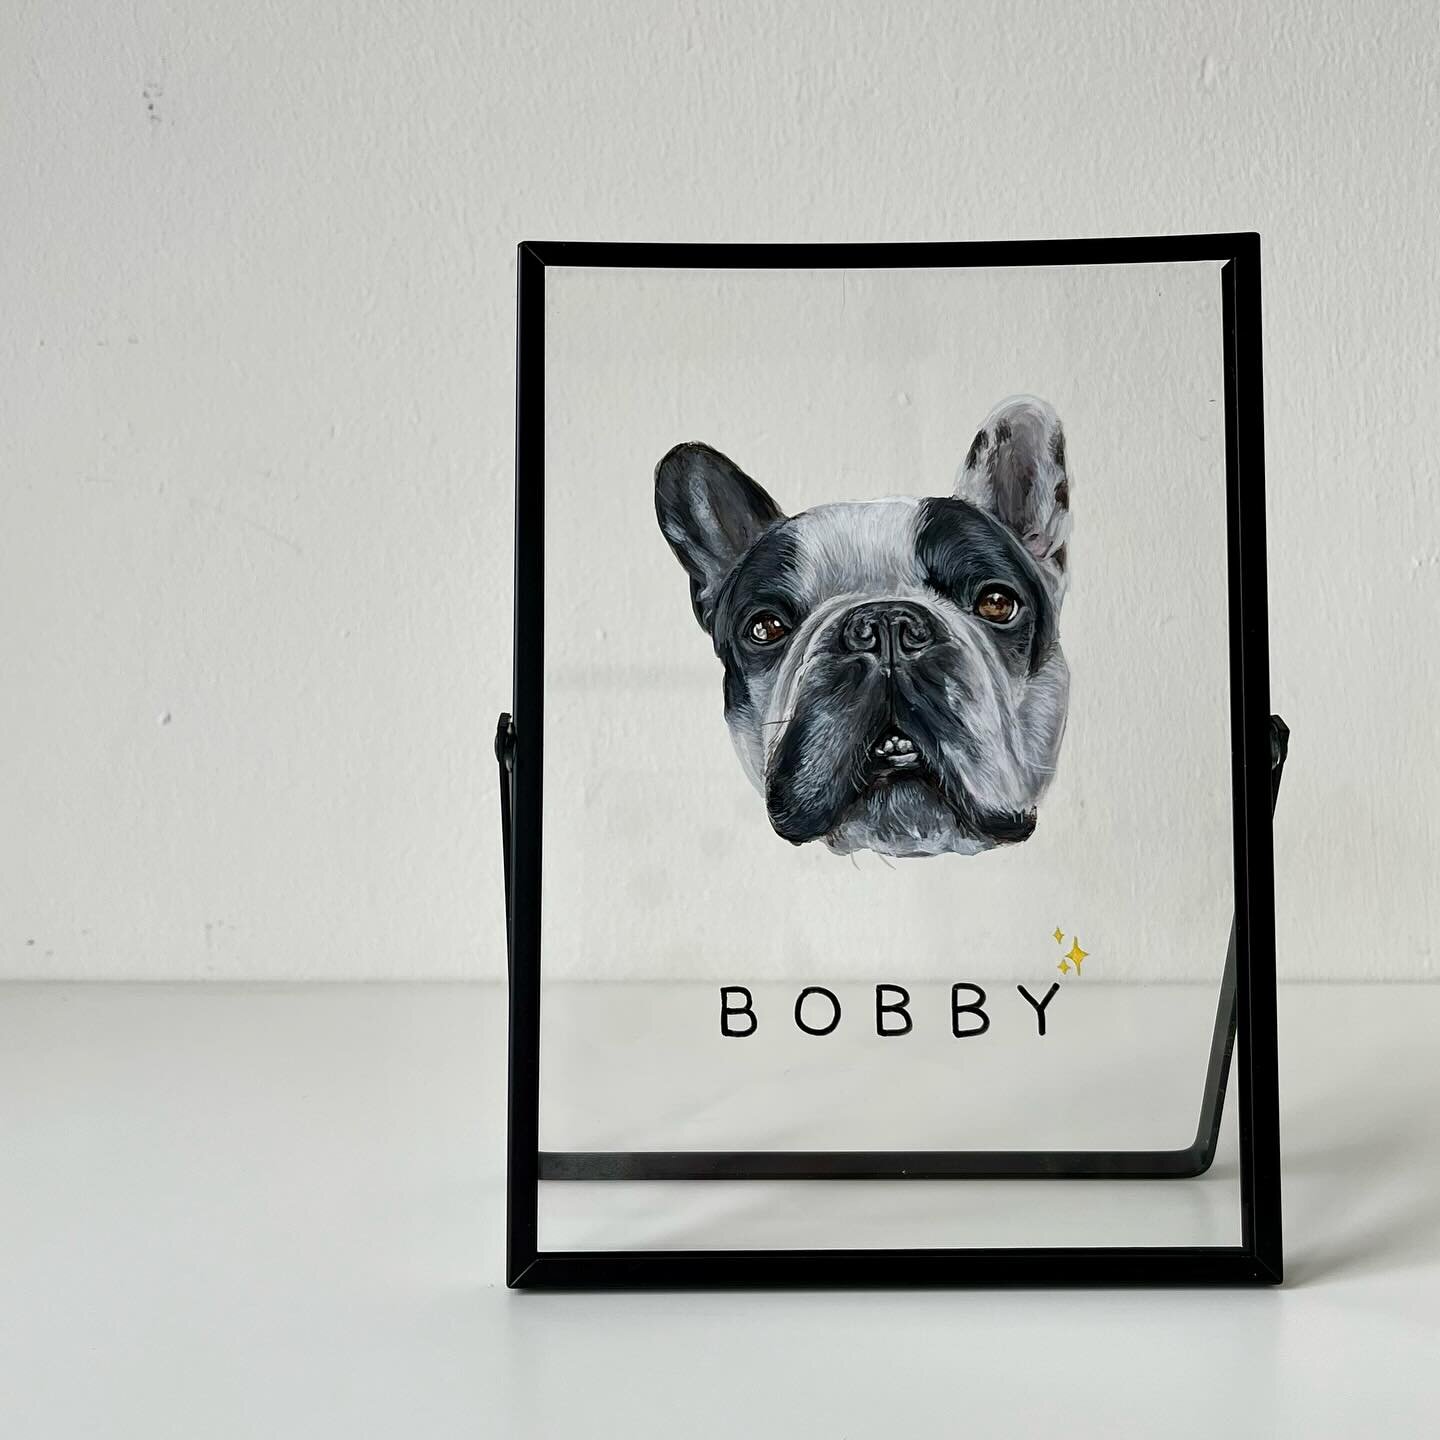 Bobby&rsquo;s memorial artwork. ✨

🖼️ 13x18 cm

🏷️
#artwork #dogartwork #dogart #dogpainting #dogportrait #paintingdog #petportrait #petportraits #petartist #dogartist #artist #dutchartist #frenchie #frenchiesofinstagram #frenchbulldog #paintedfurr